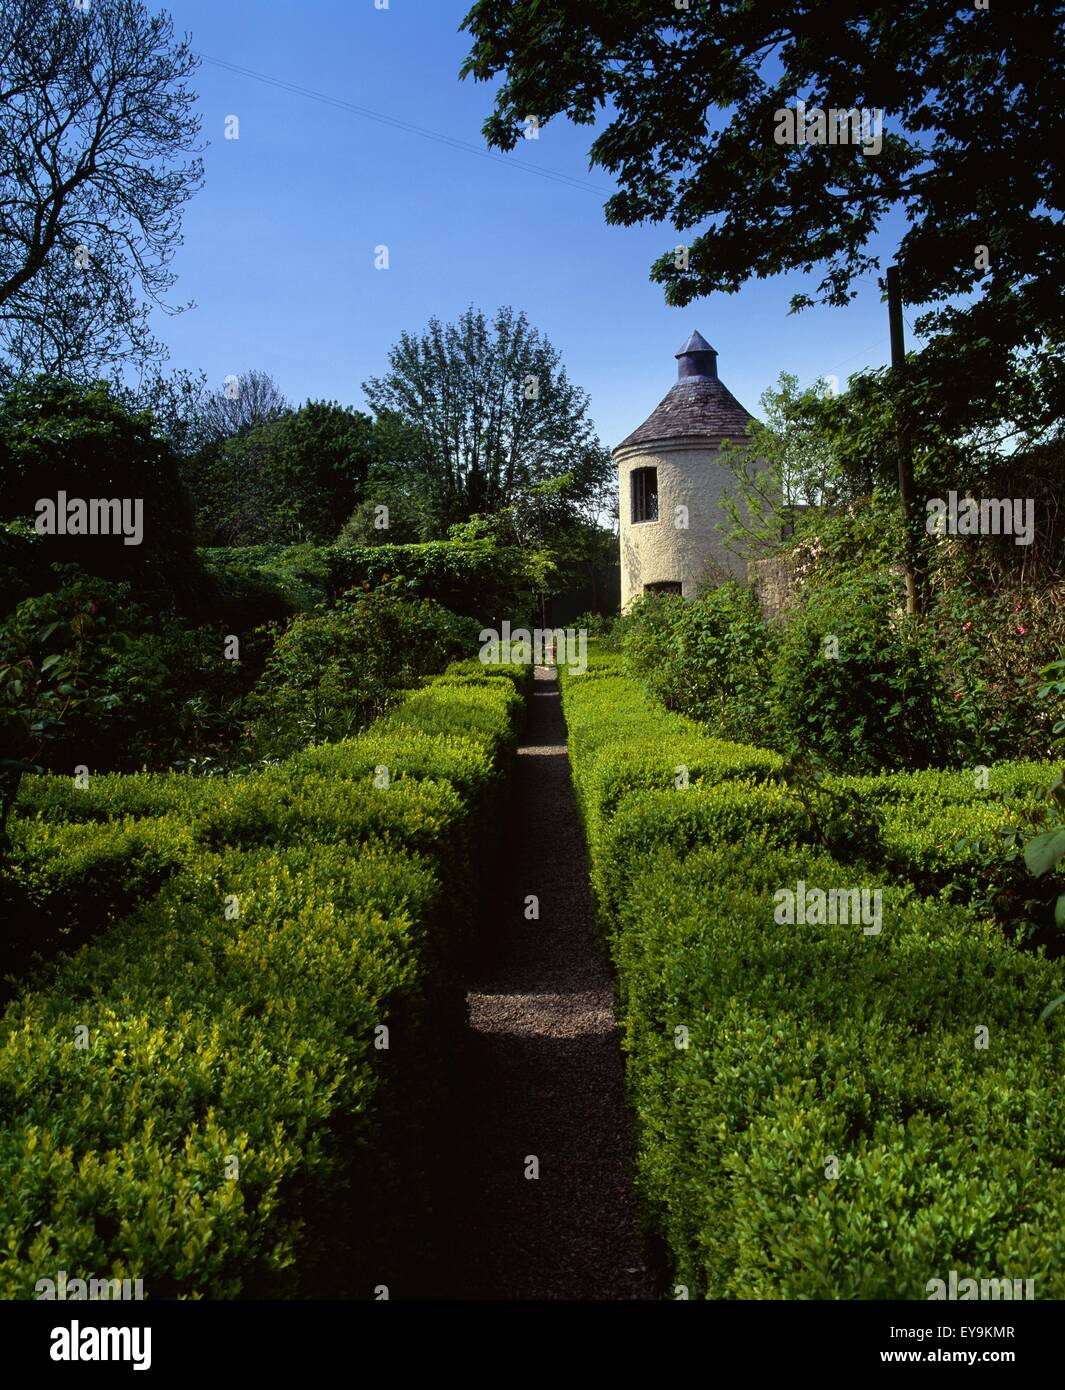 Isolde's Tower, White Garden, Butterstream Gardens, Co Meath, Ireland; Dovecote In Gardens During Summer Stock Photo